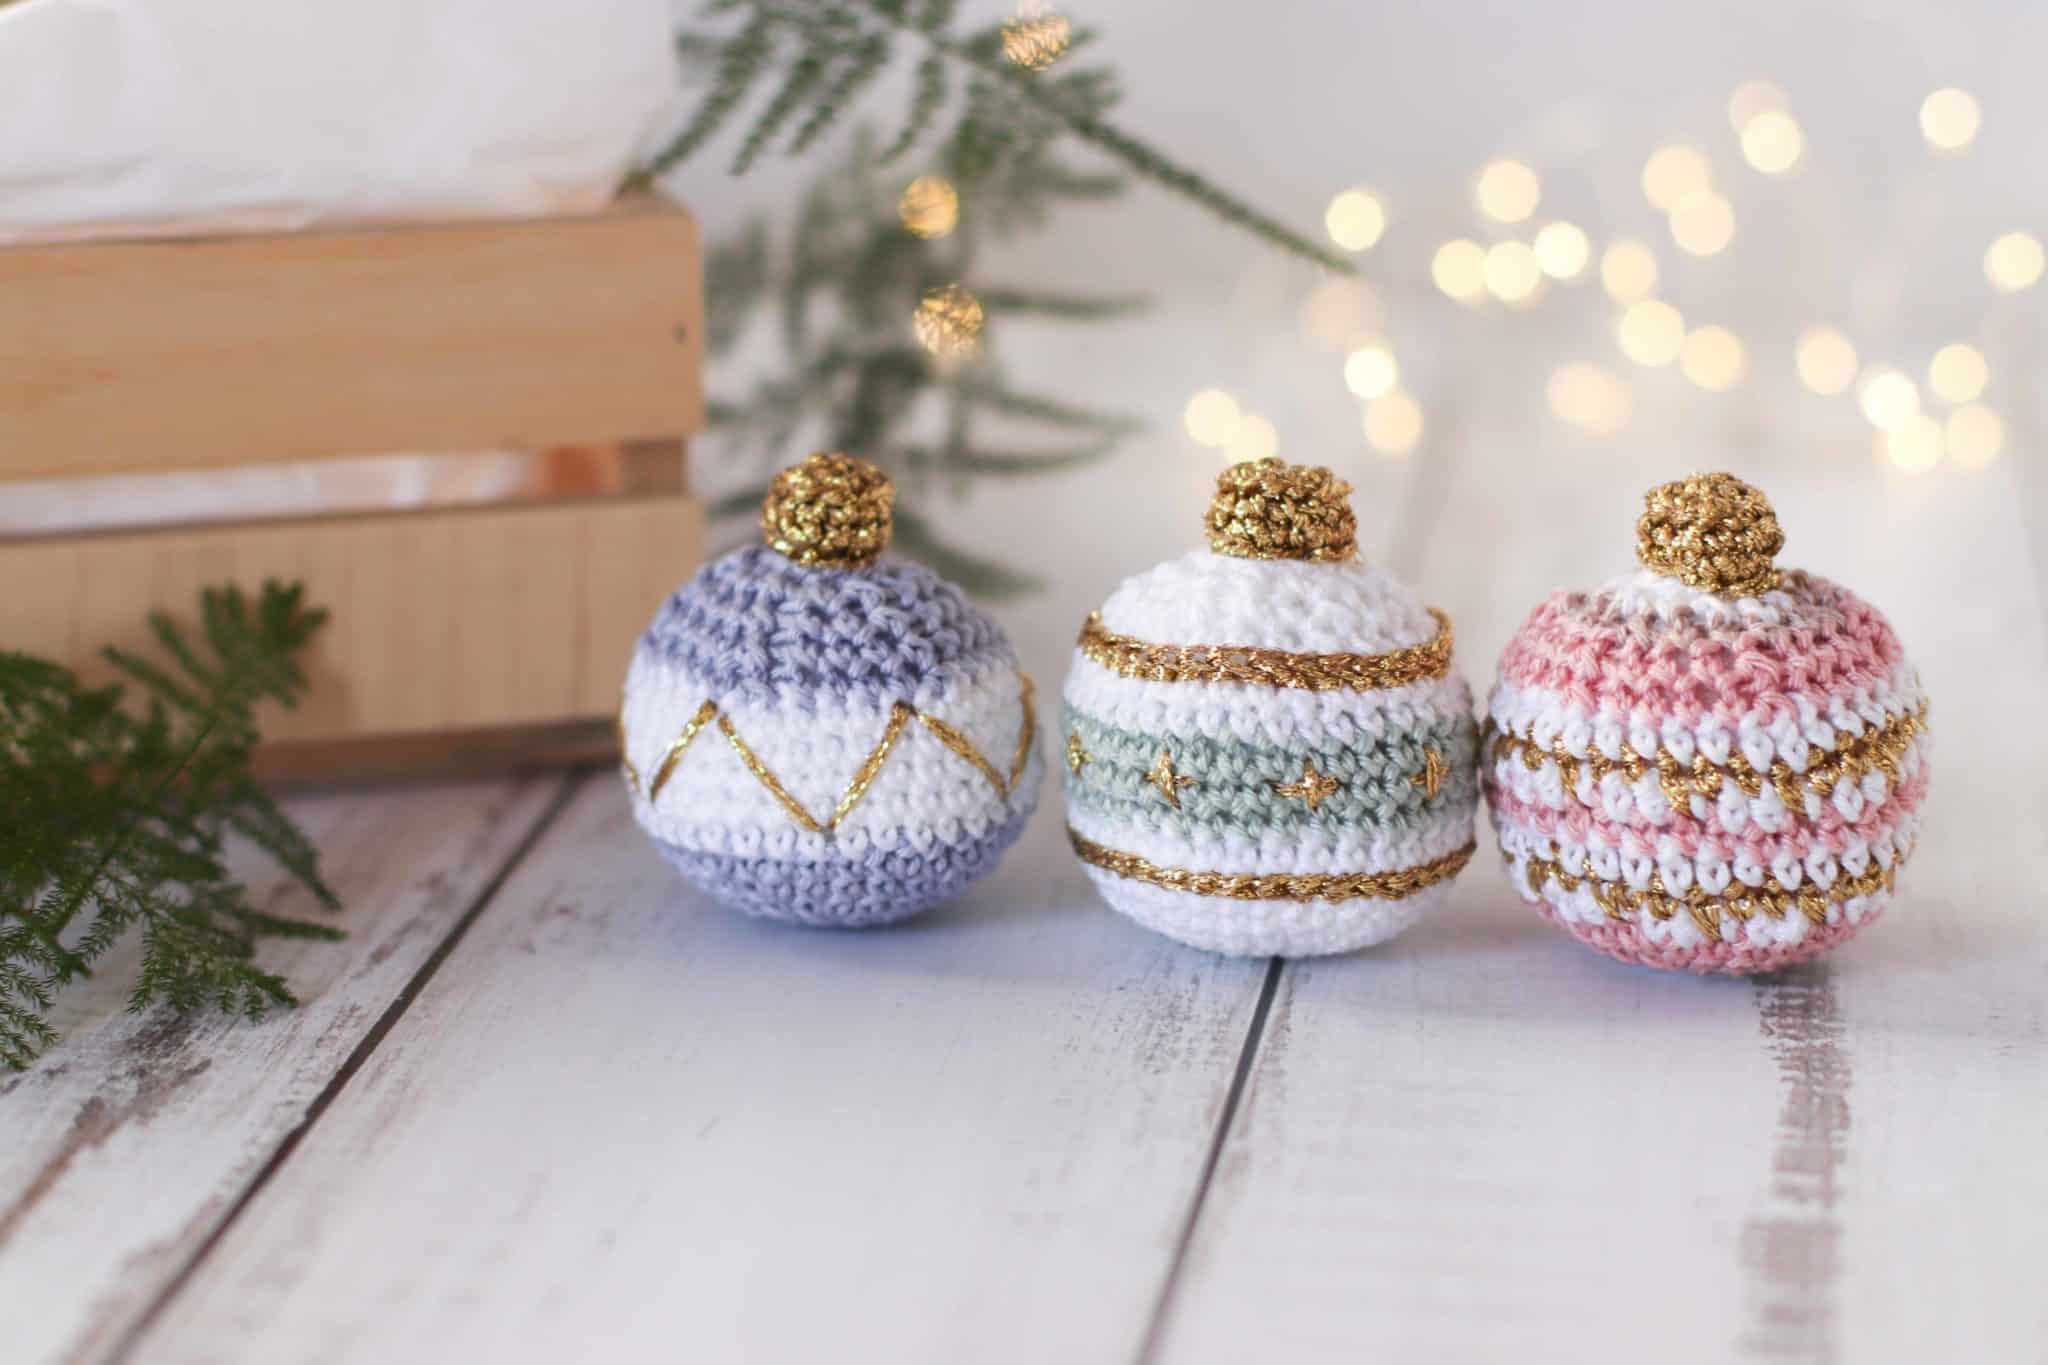 Three crochet Christmas baubles